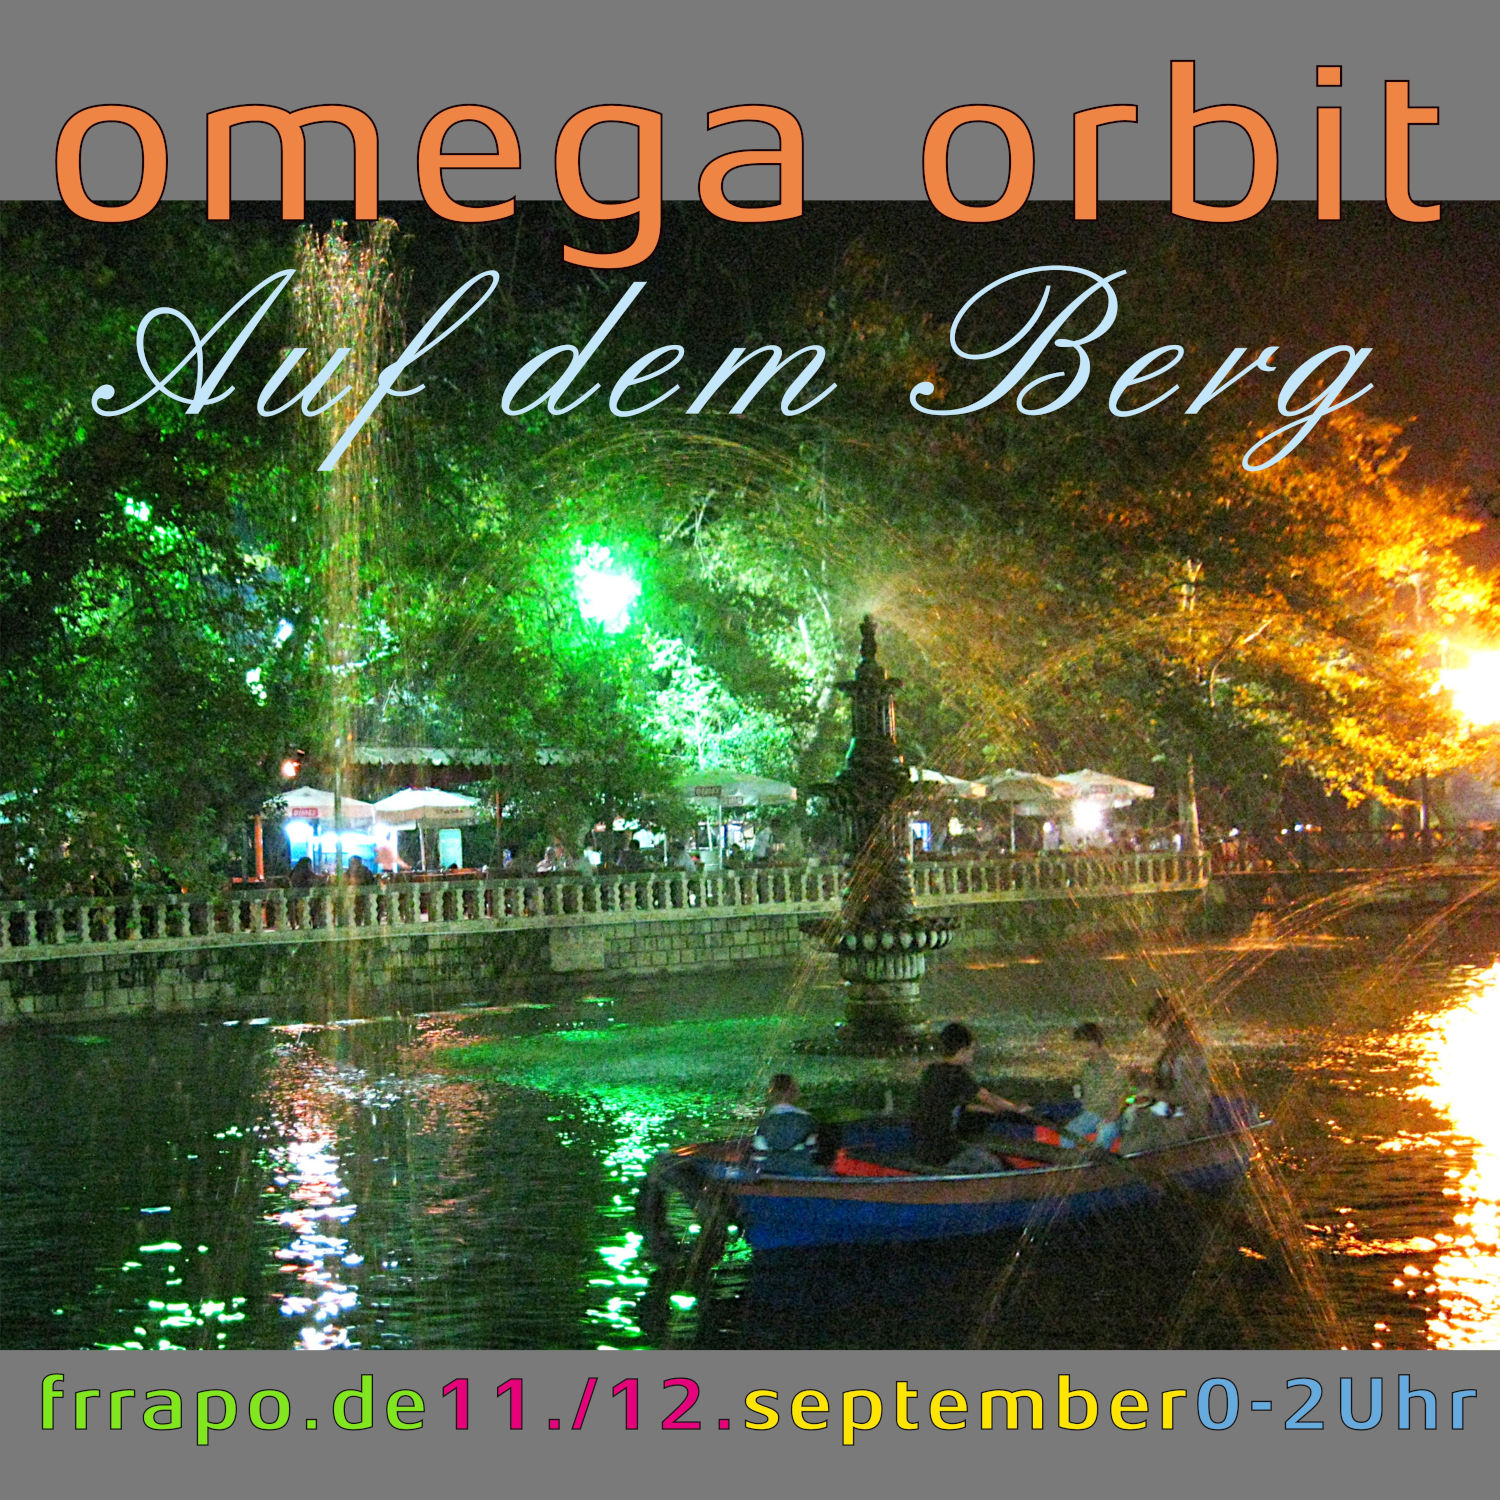 Omega-Orbit: Lustwandeln im Rosengarten der Klänge – September is here again.